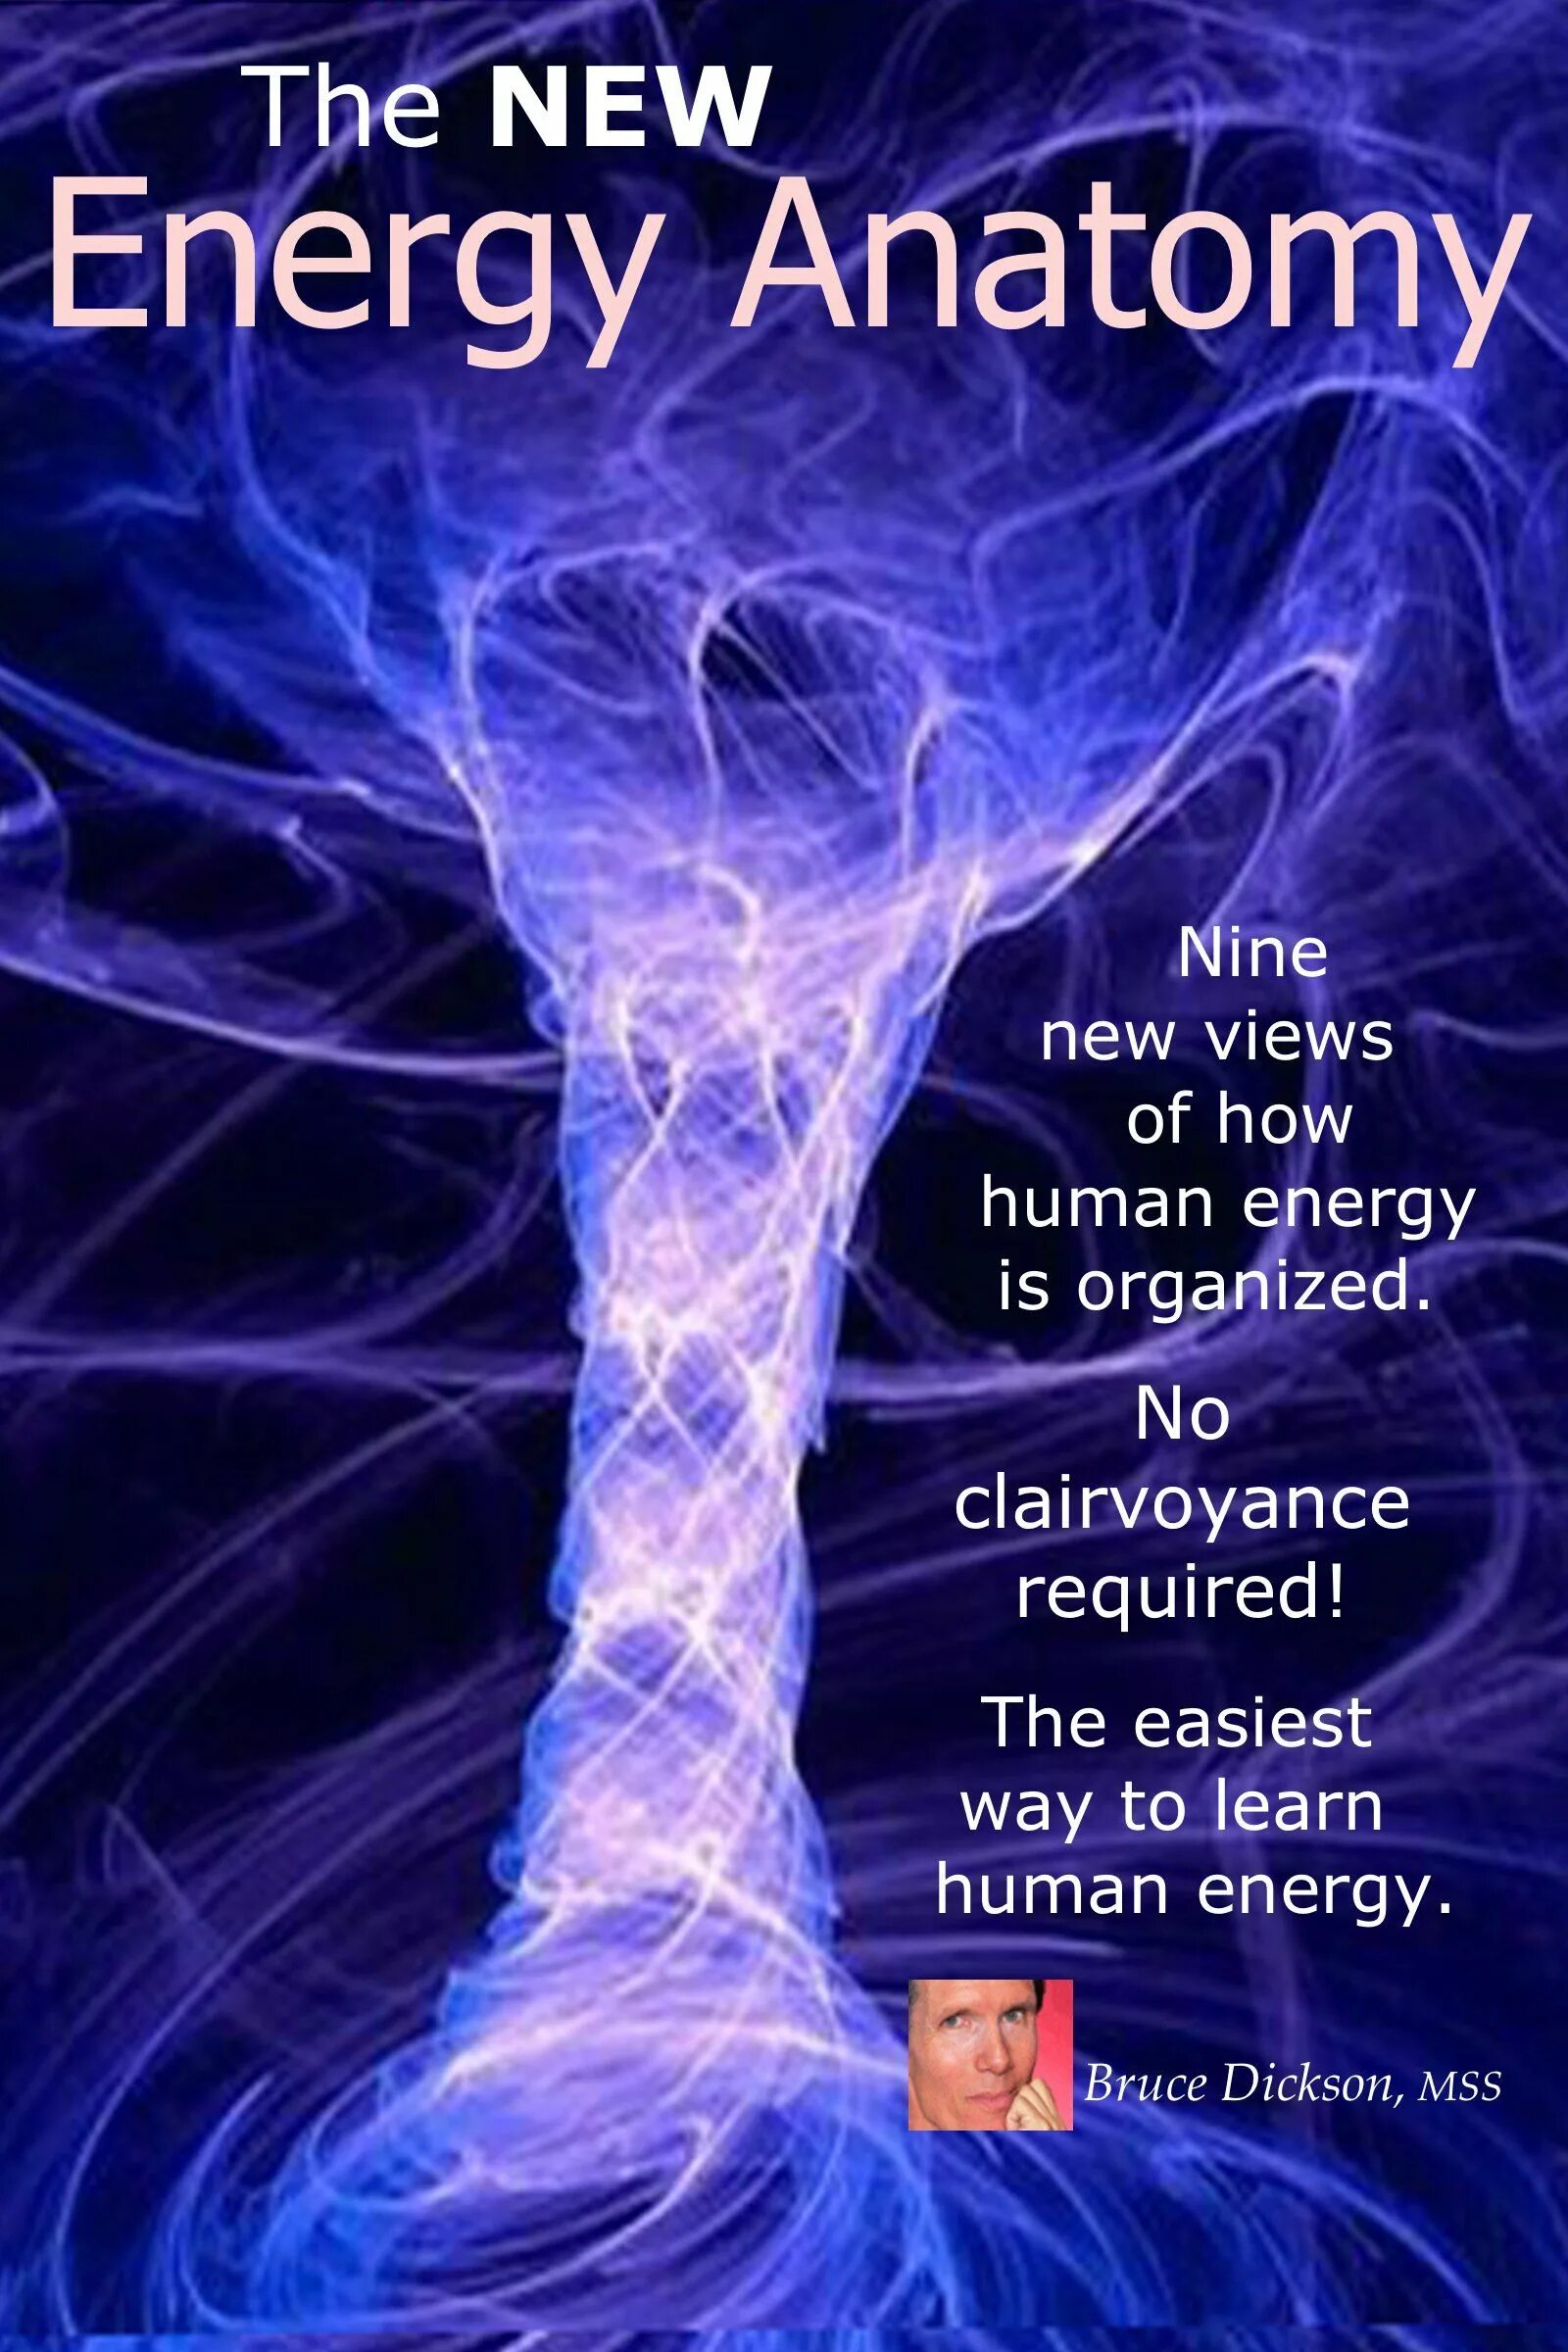 Healing Energy Anatomy. Human Energy слоган. Ace the Energy of Light.